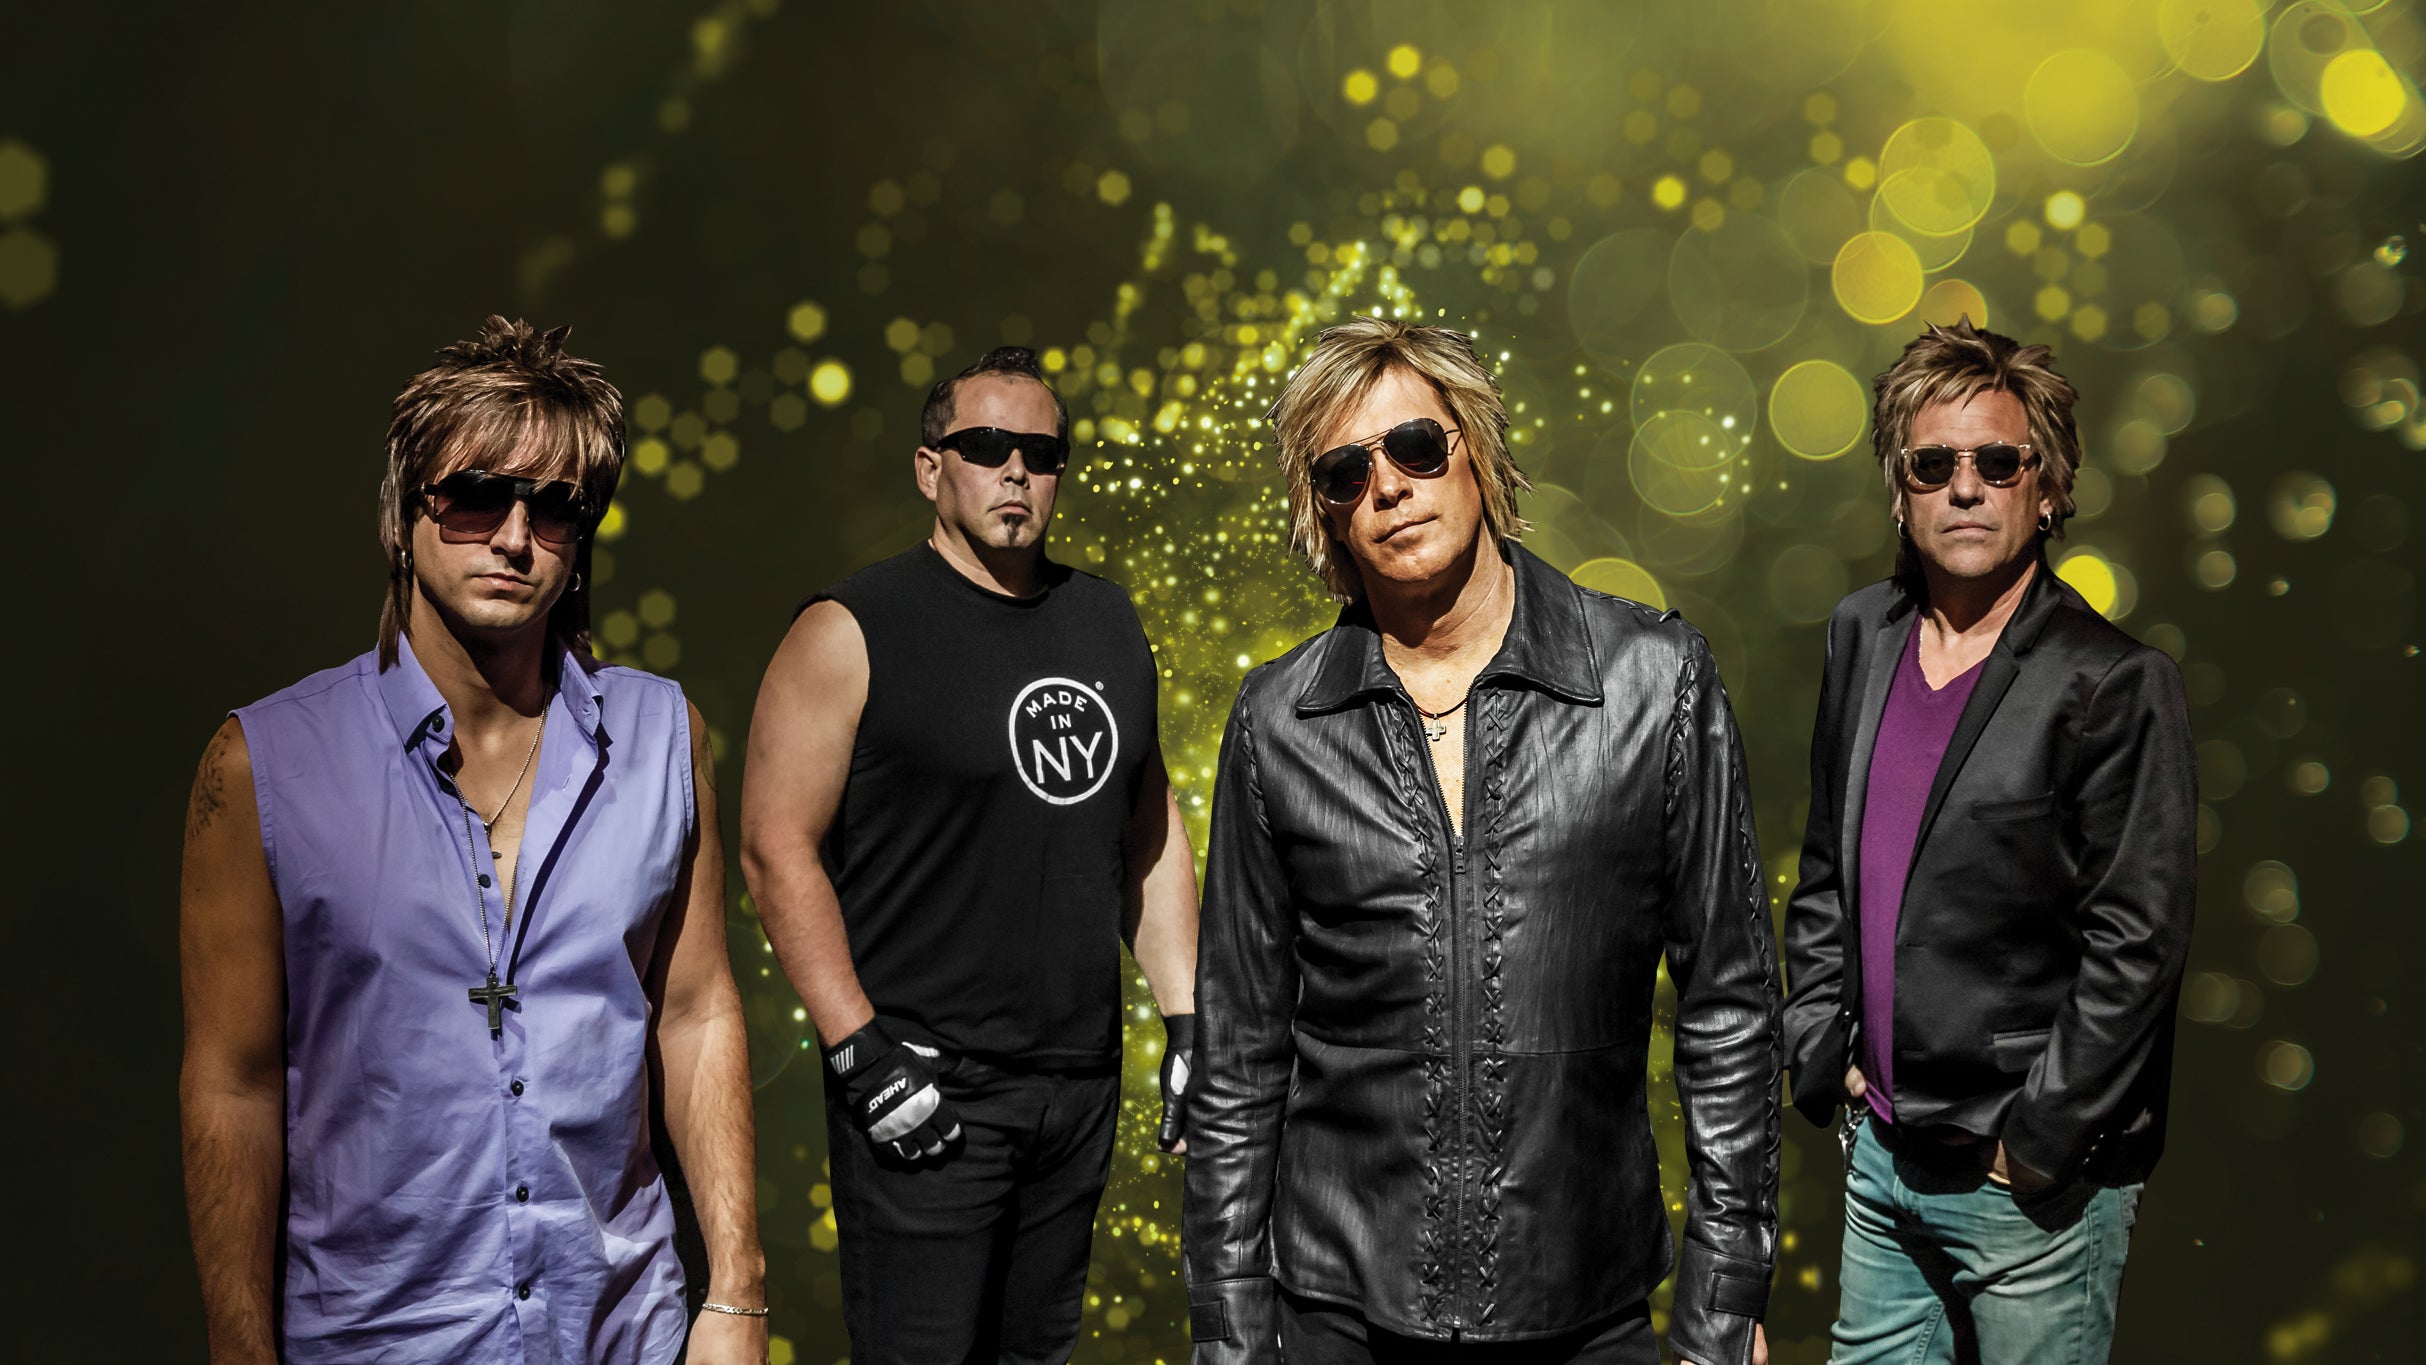 Slippery Whey Wet - Bon Jovi Tribute in Orlando promo photo for Ticketmaster presale offer code